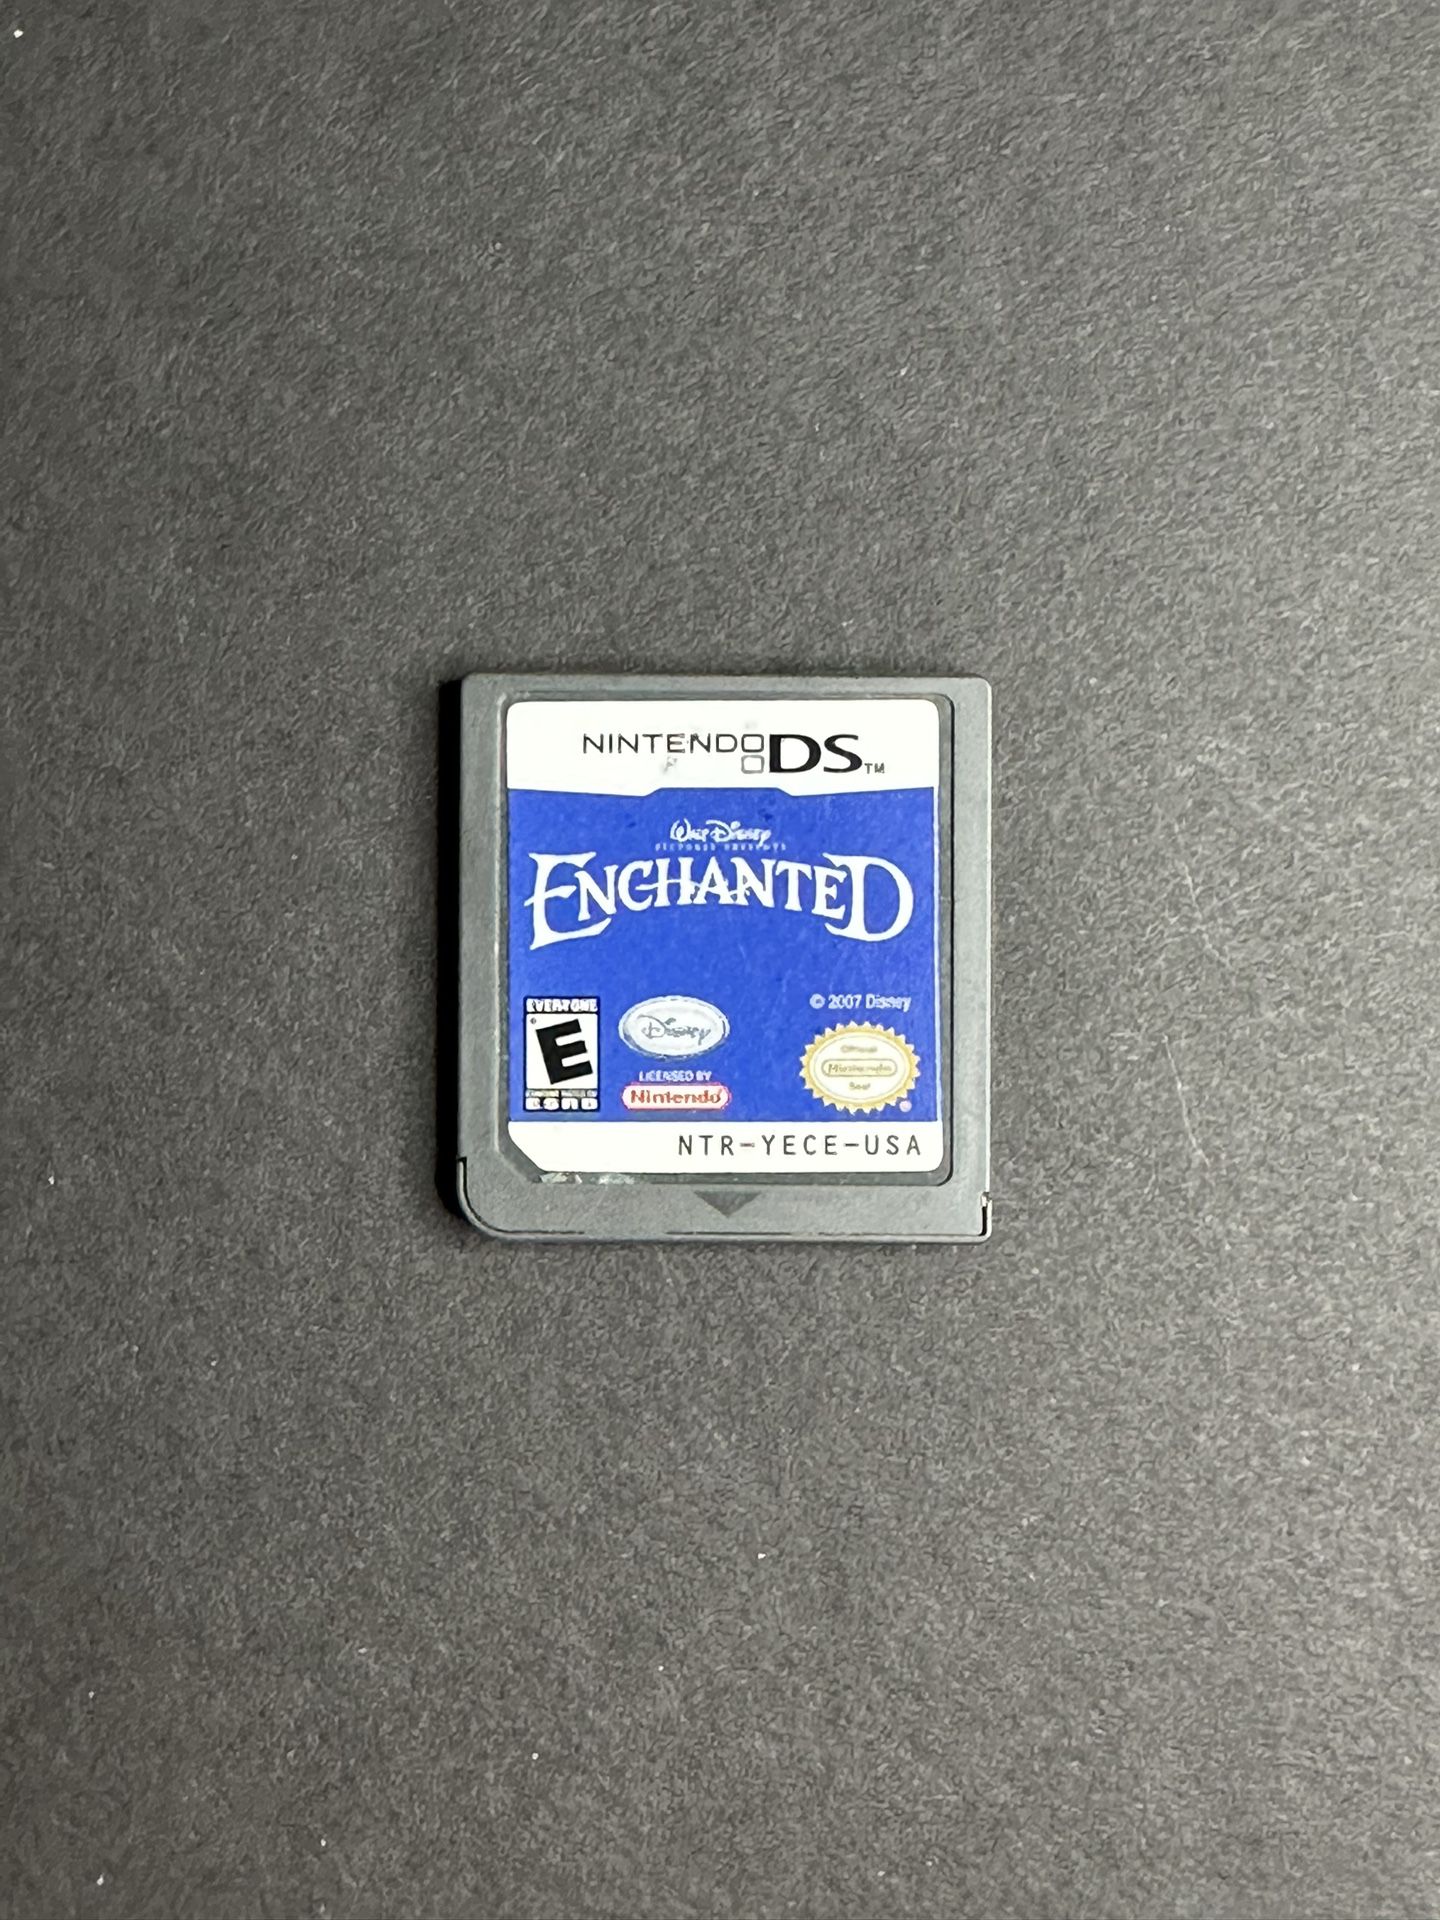 Walt Disney Enchanted game for DS